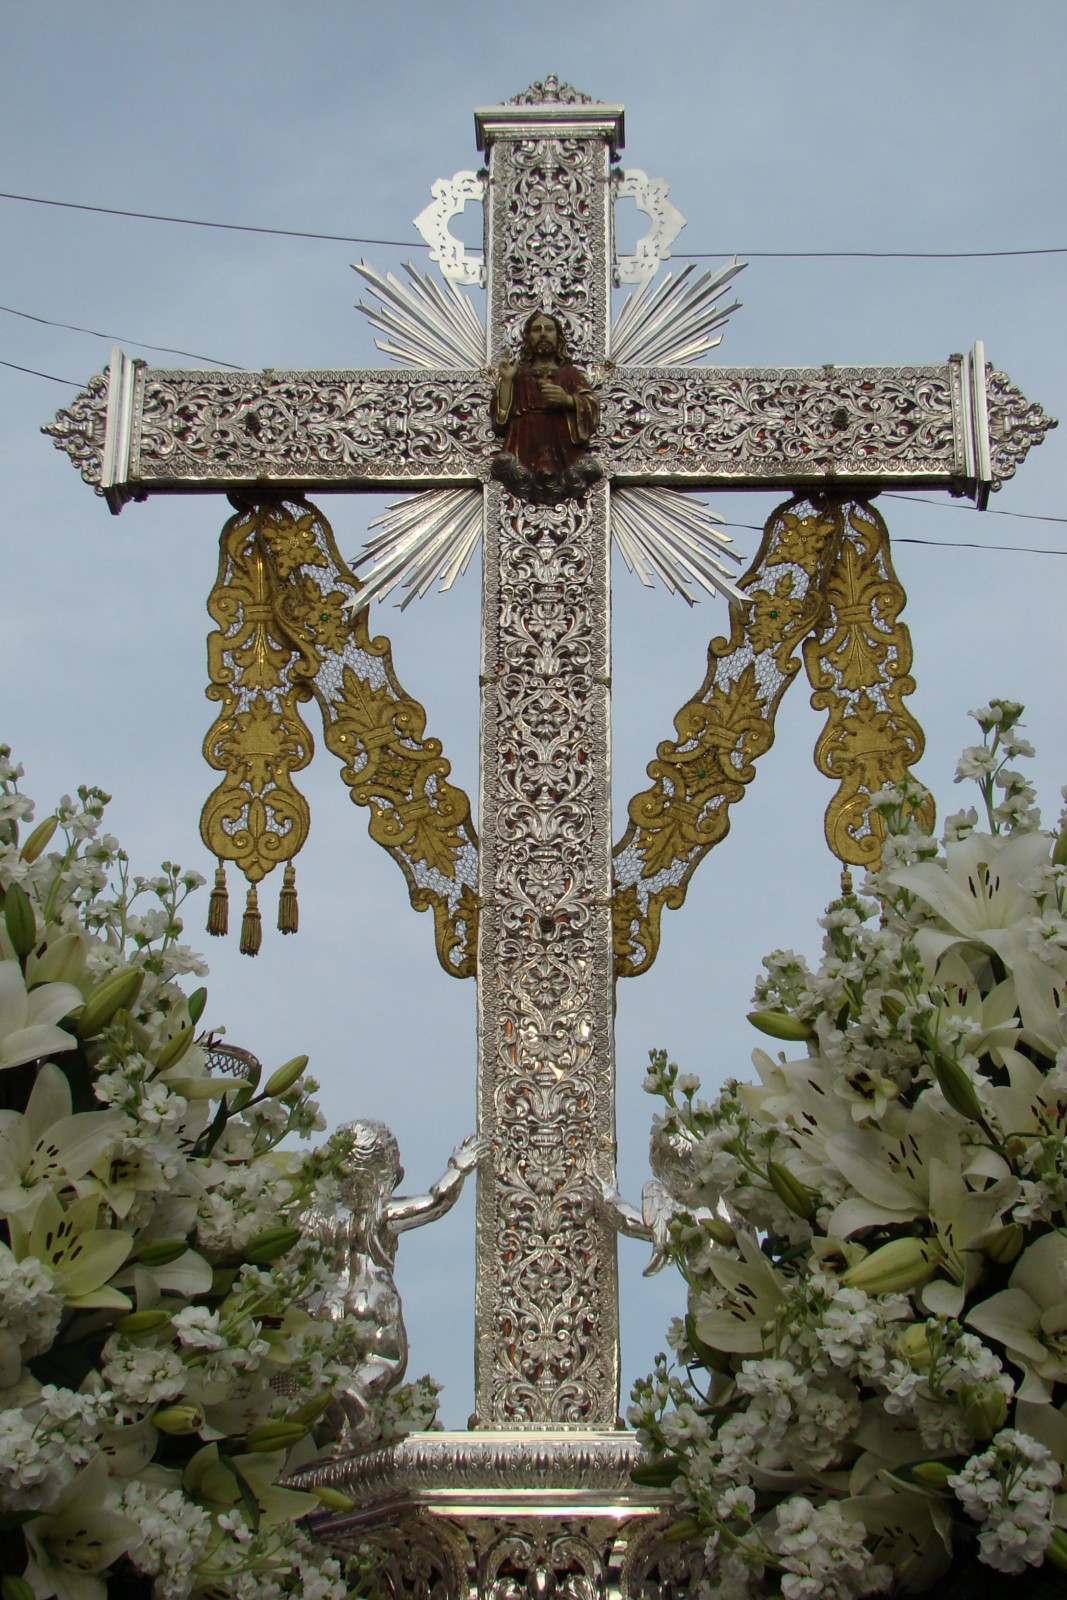 BLOGMORADO | hermanosdelasaguas.org: La Cruz de la calle Malva. Lucena